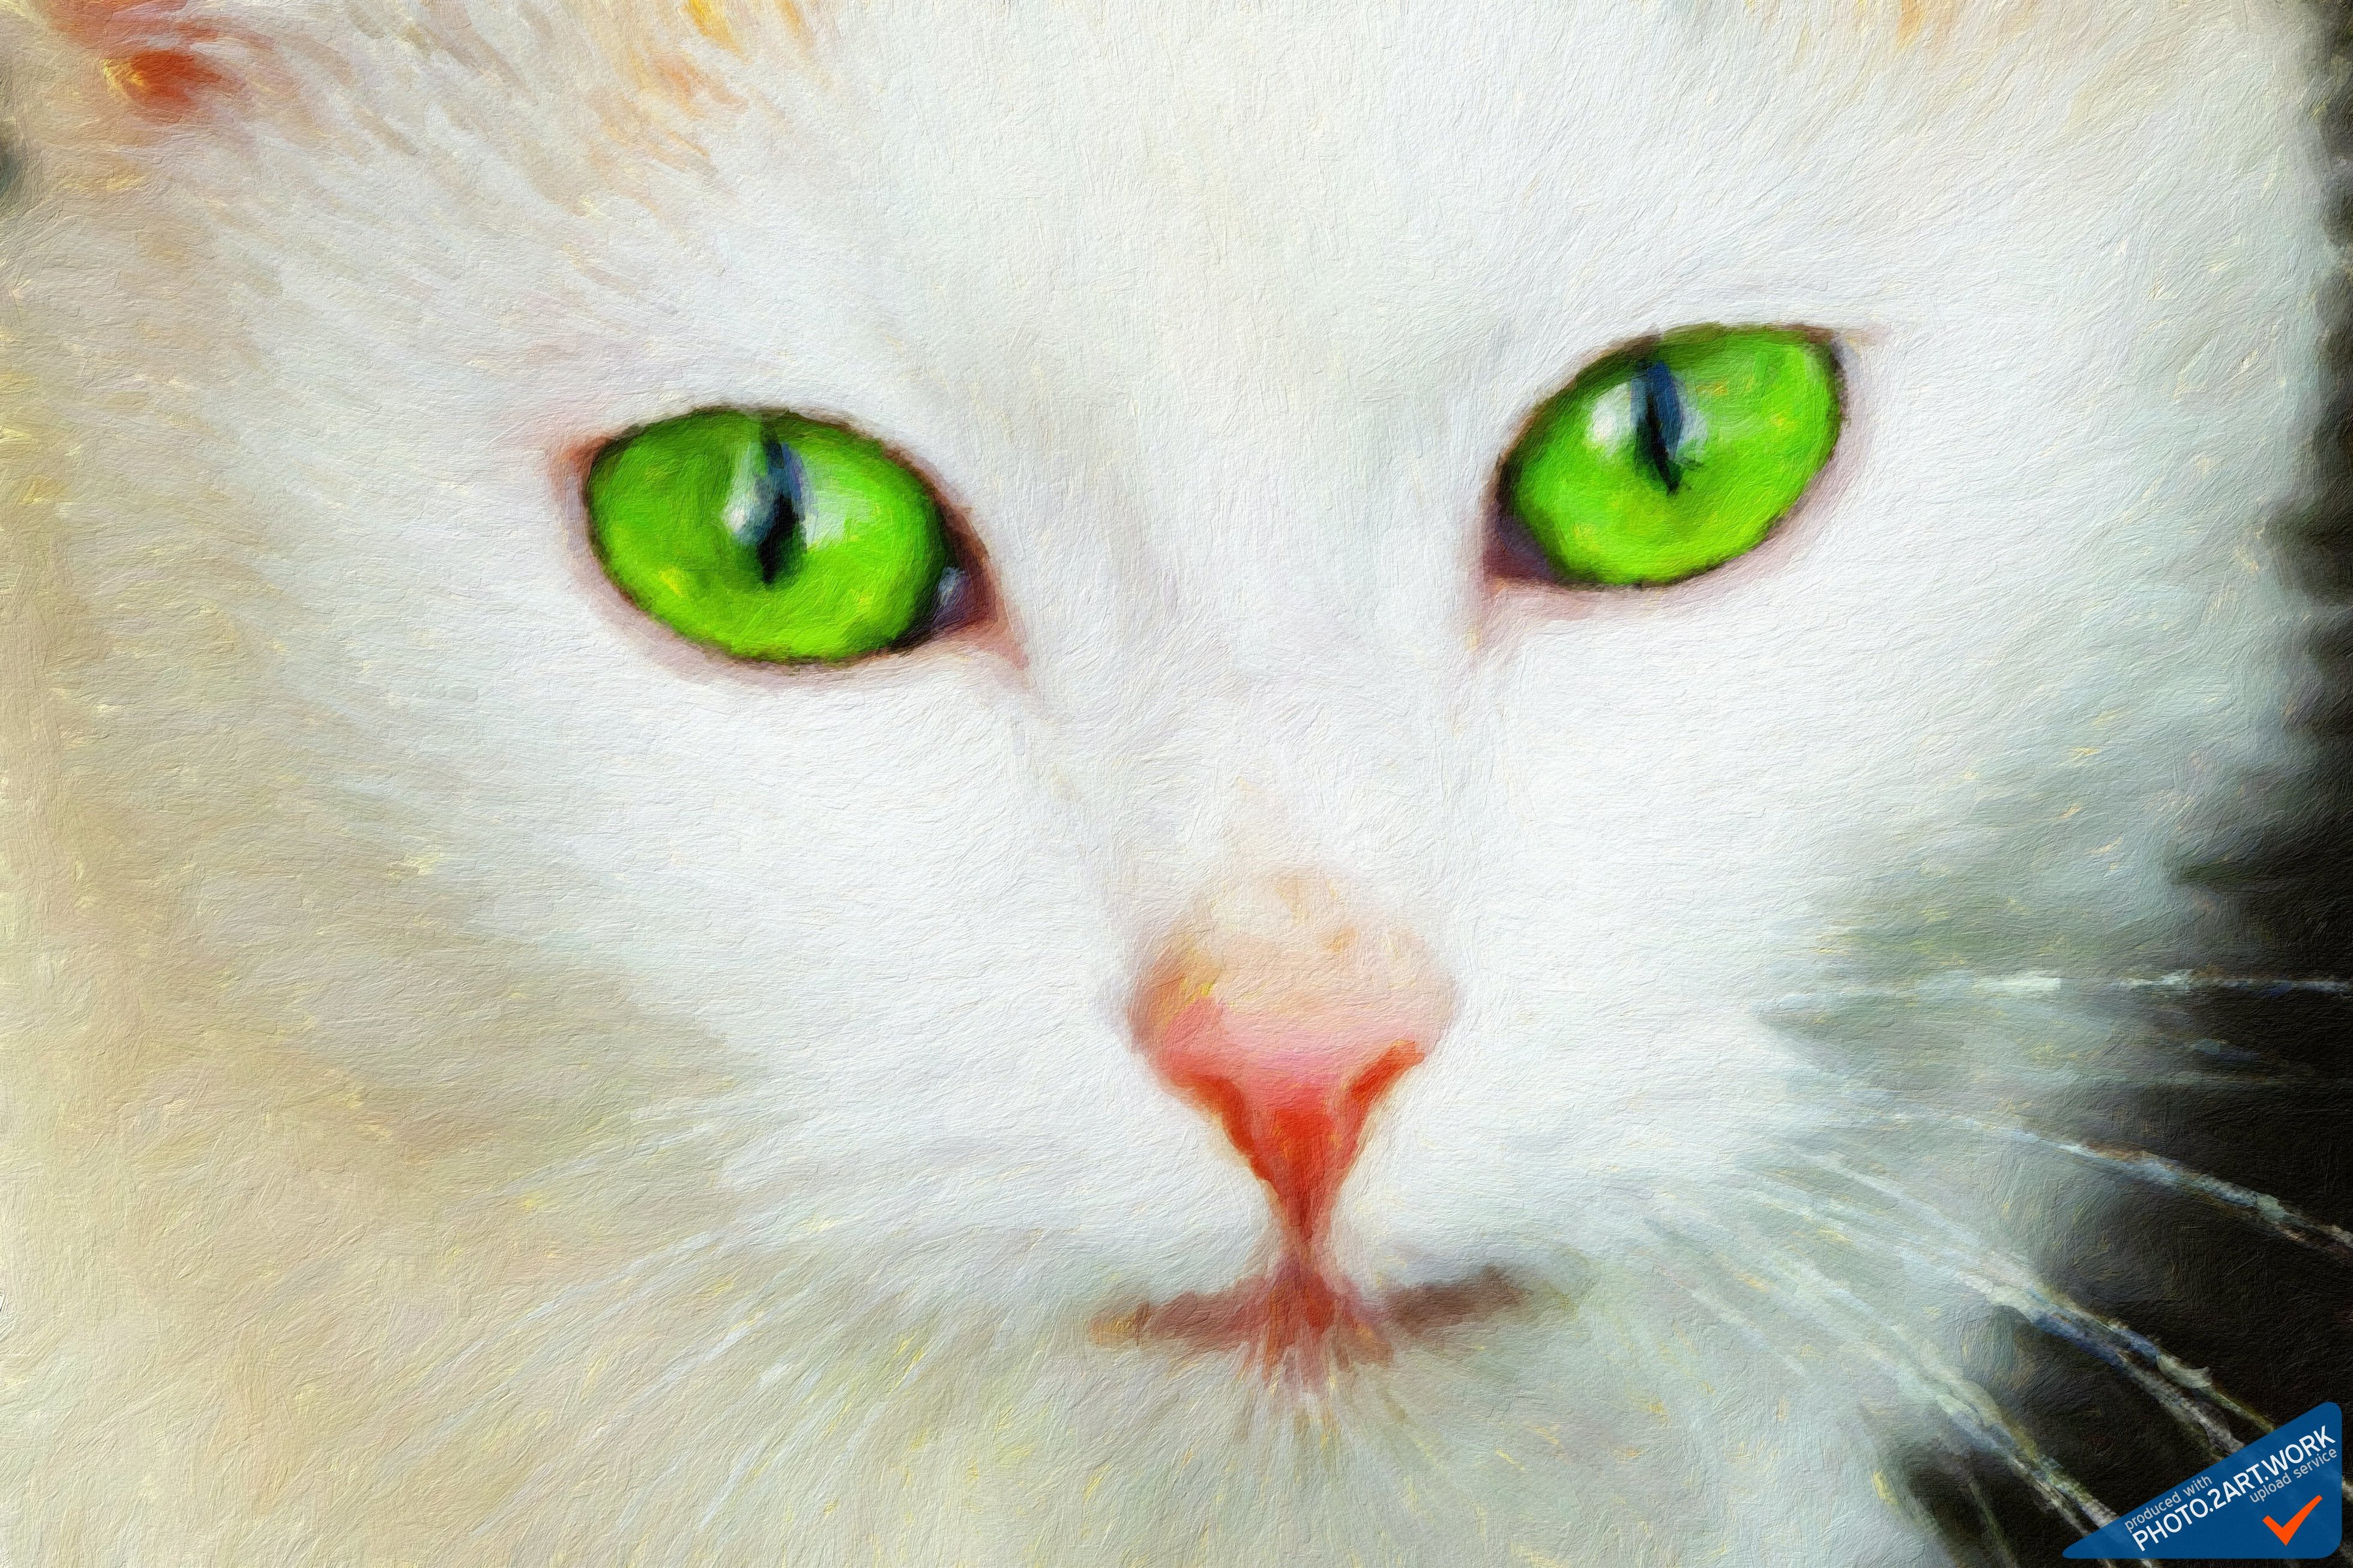 Cat - id: 16236-105017-7342 photo